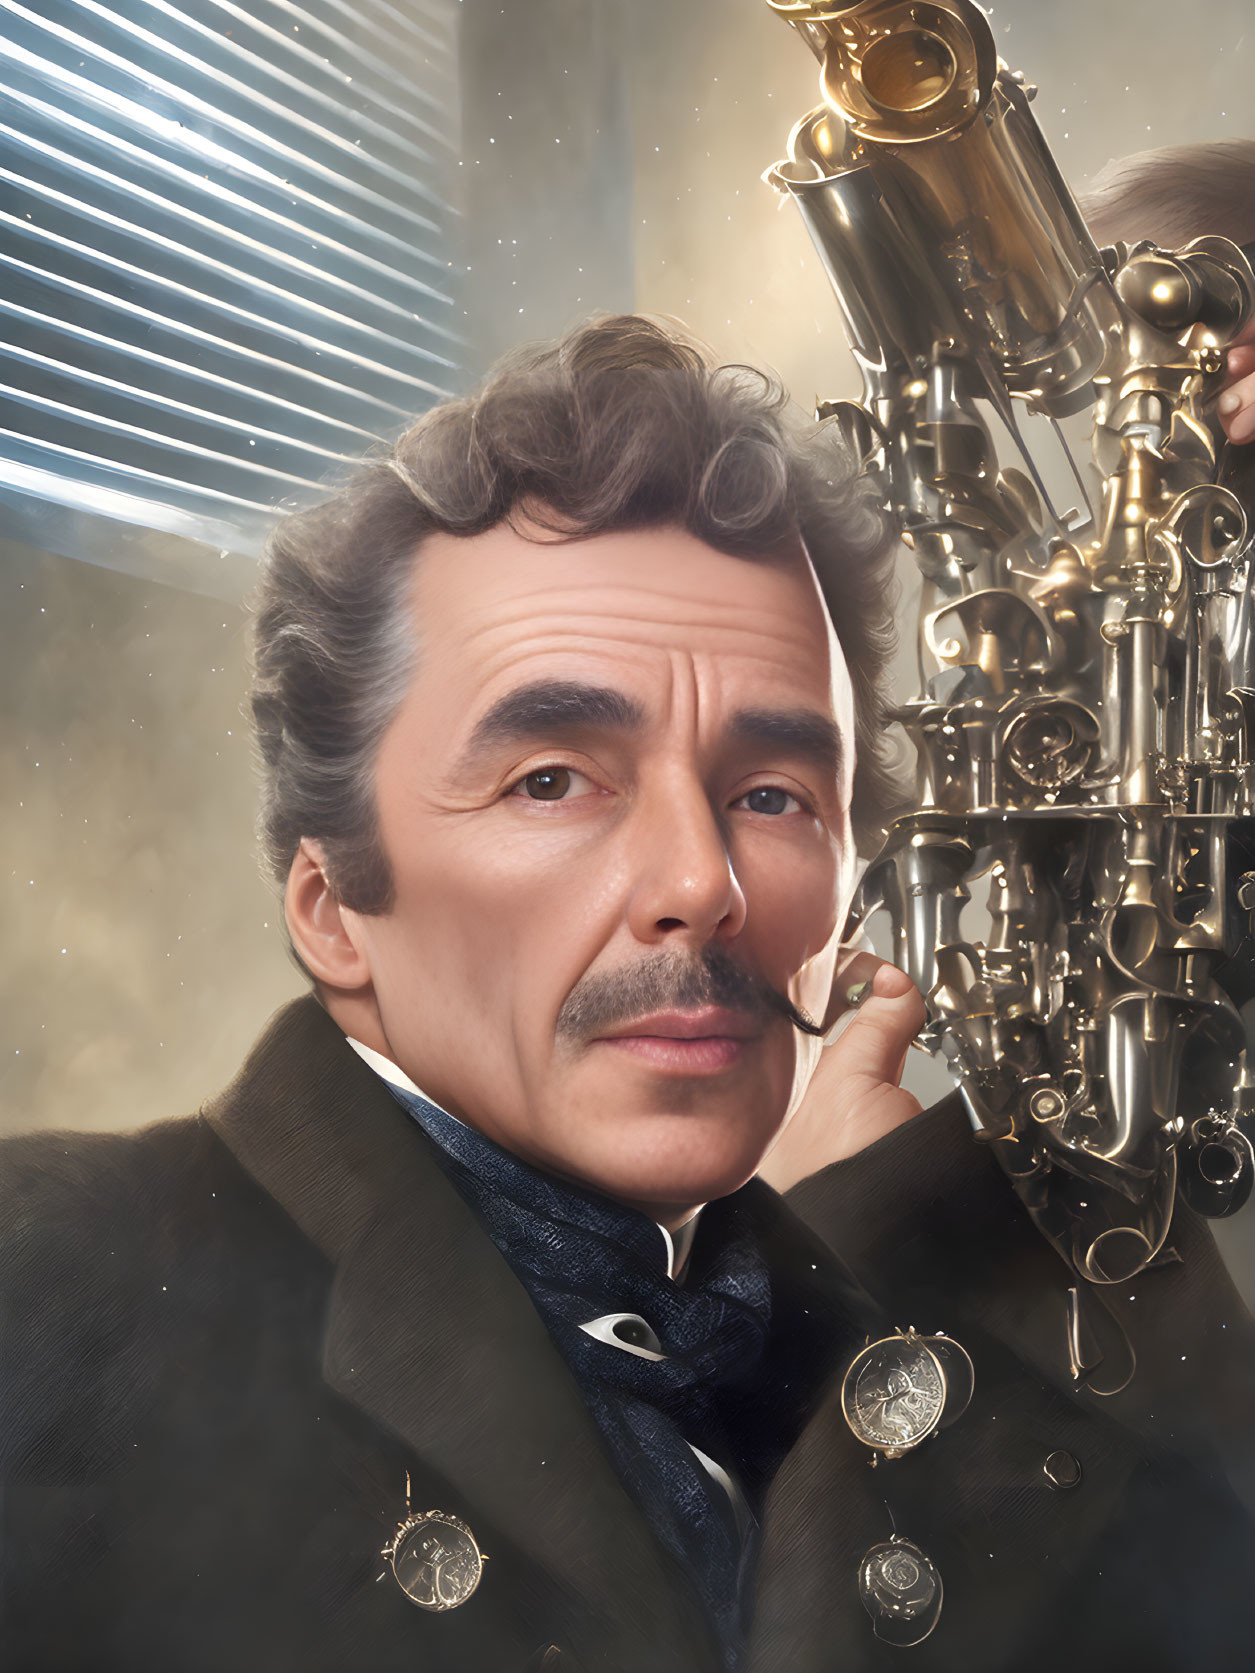 Victorian-Era Man with Mustache Holding Scientific Instruments